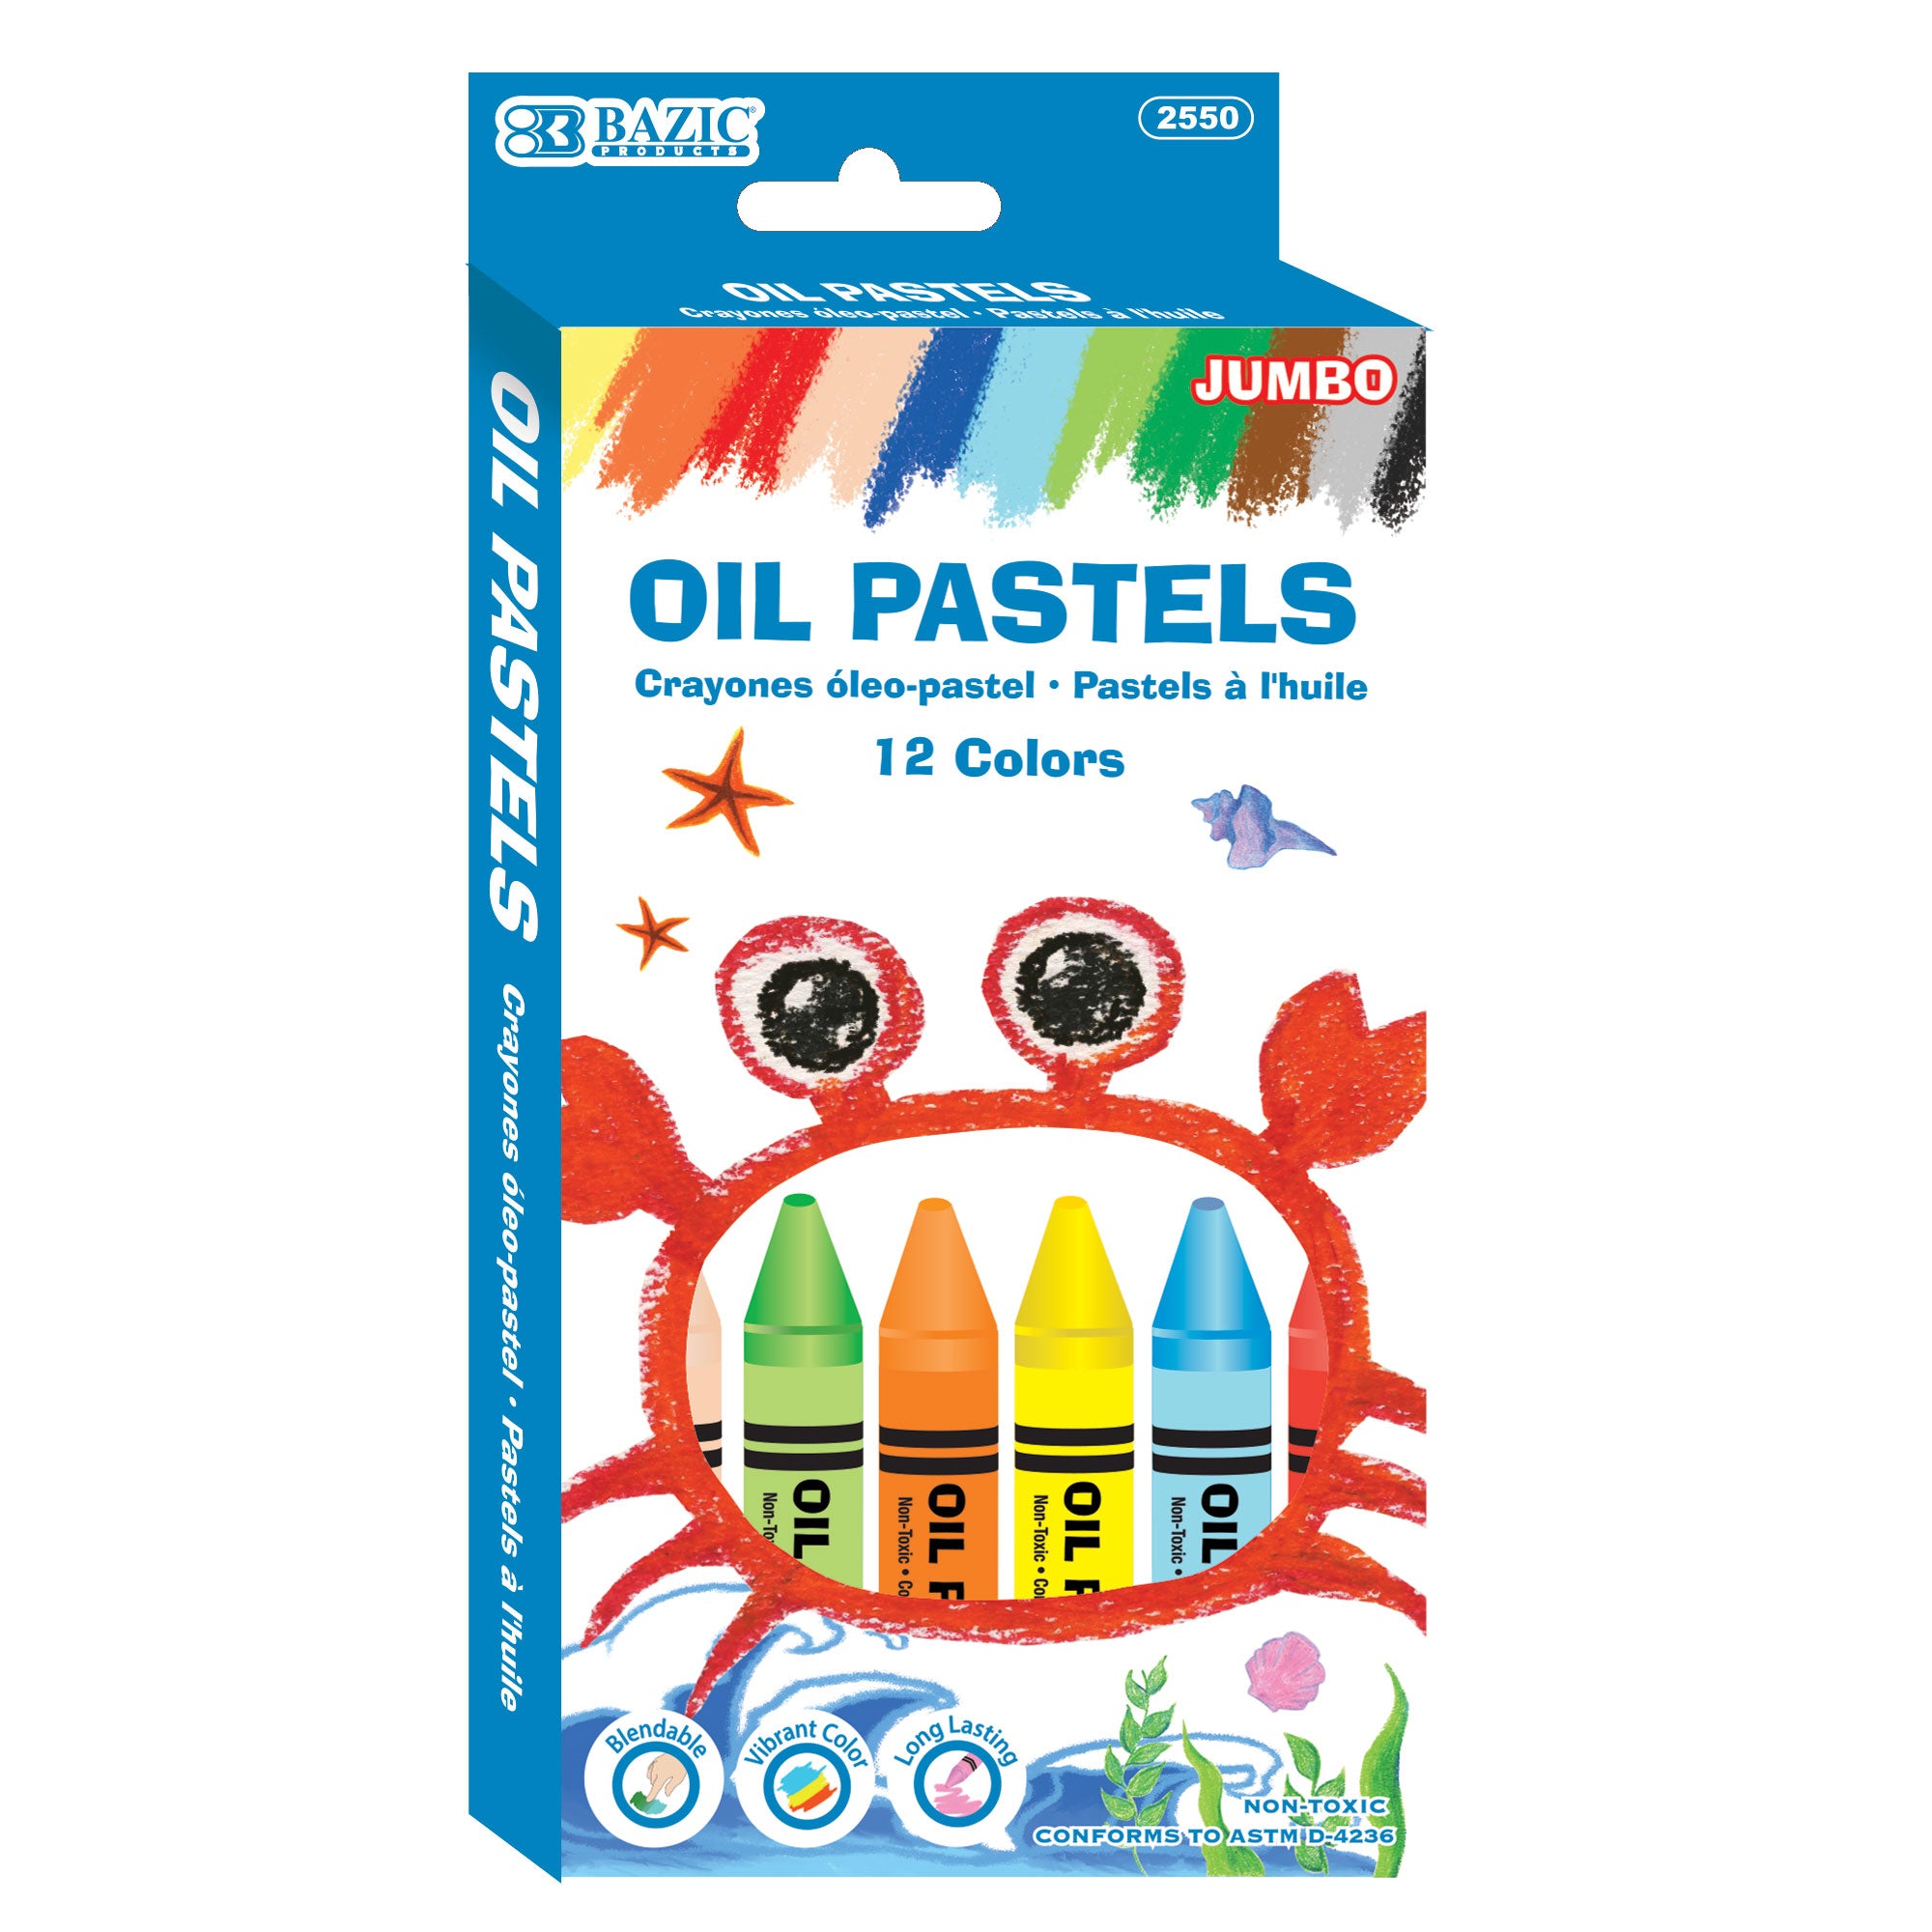 Jumbo Oil Pastels 24 Color Crayons Oil Paint Sticks Soft Pastels Children Drawin